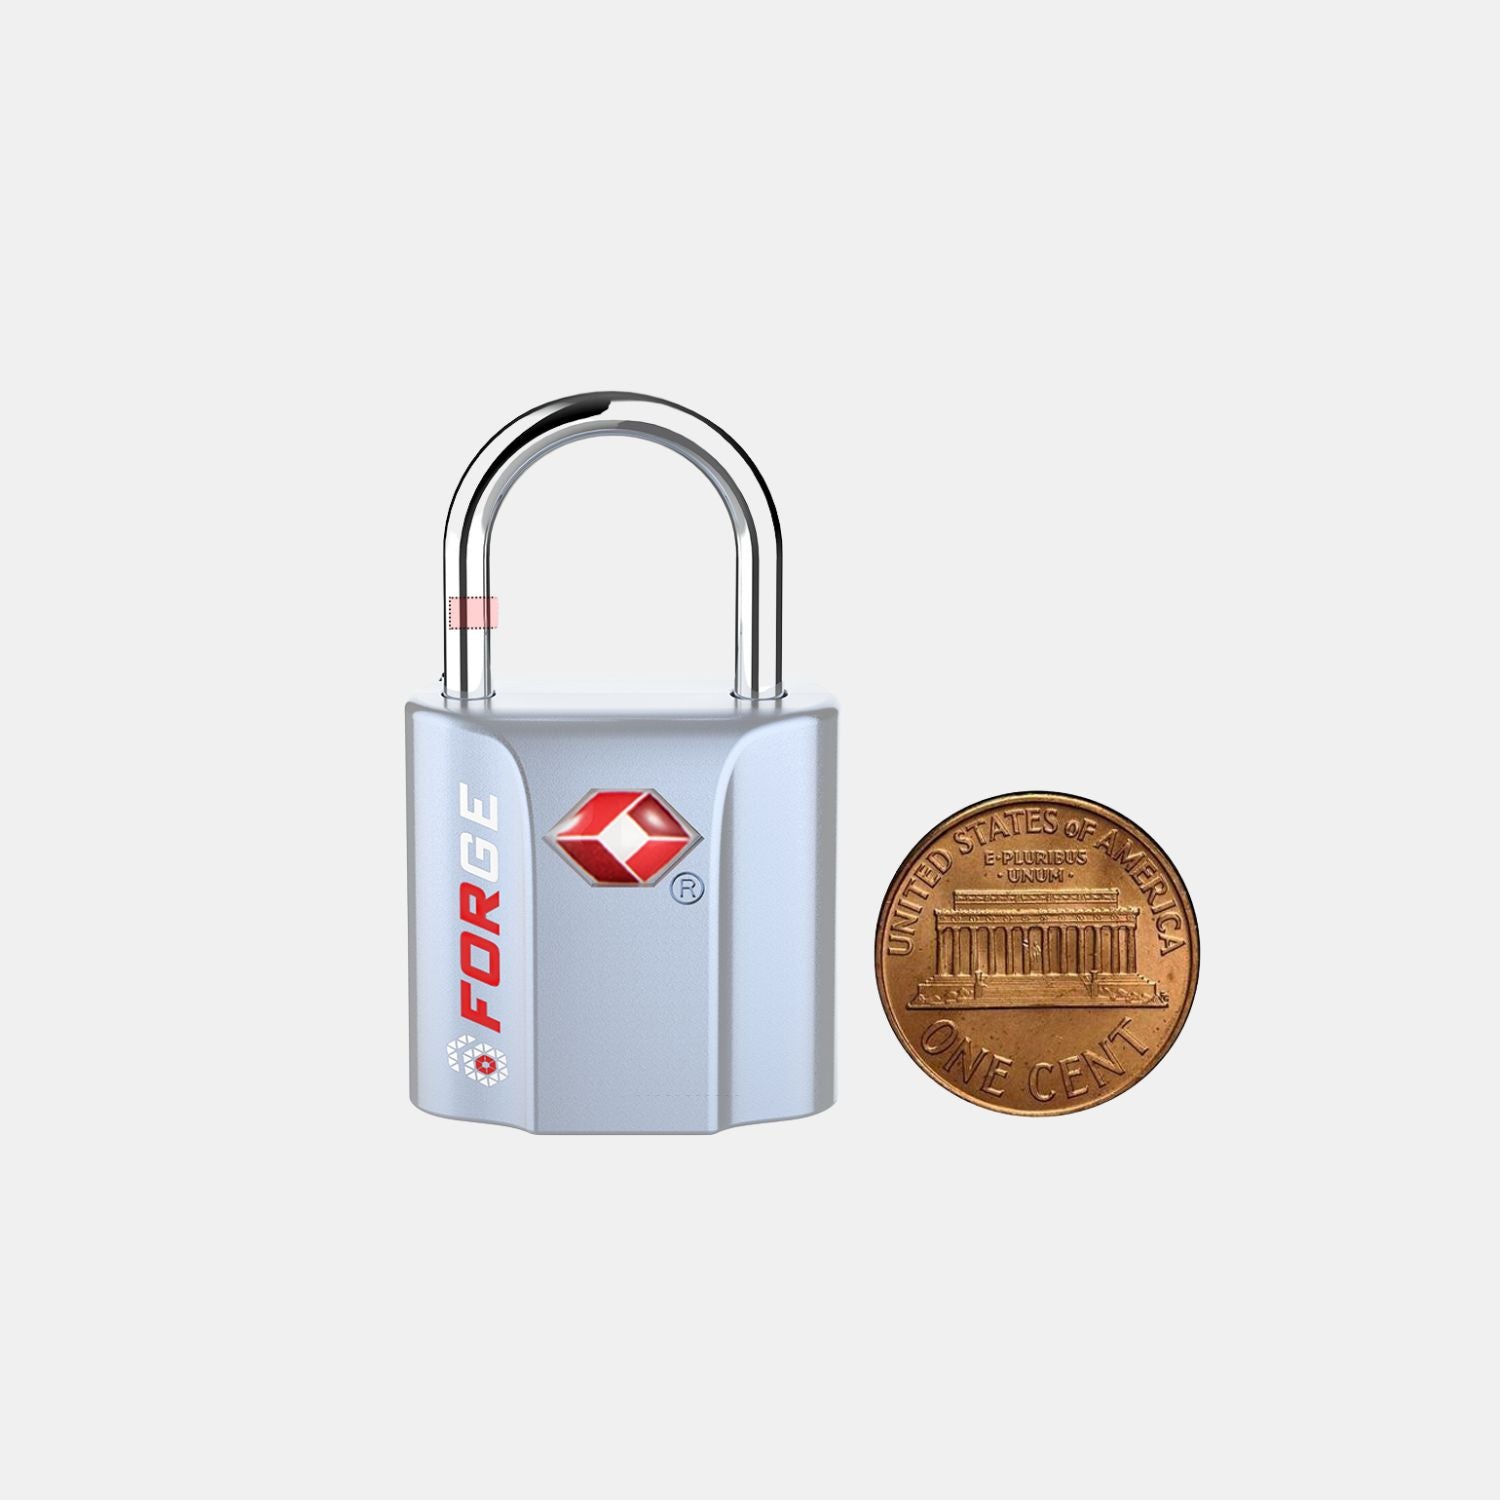 TSA Approved Dimple Key Luggage Lock - TSA006 Key, Ultra-Secure Small Size Lock. Silver 4 Locks